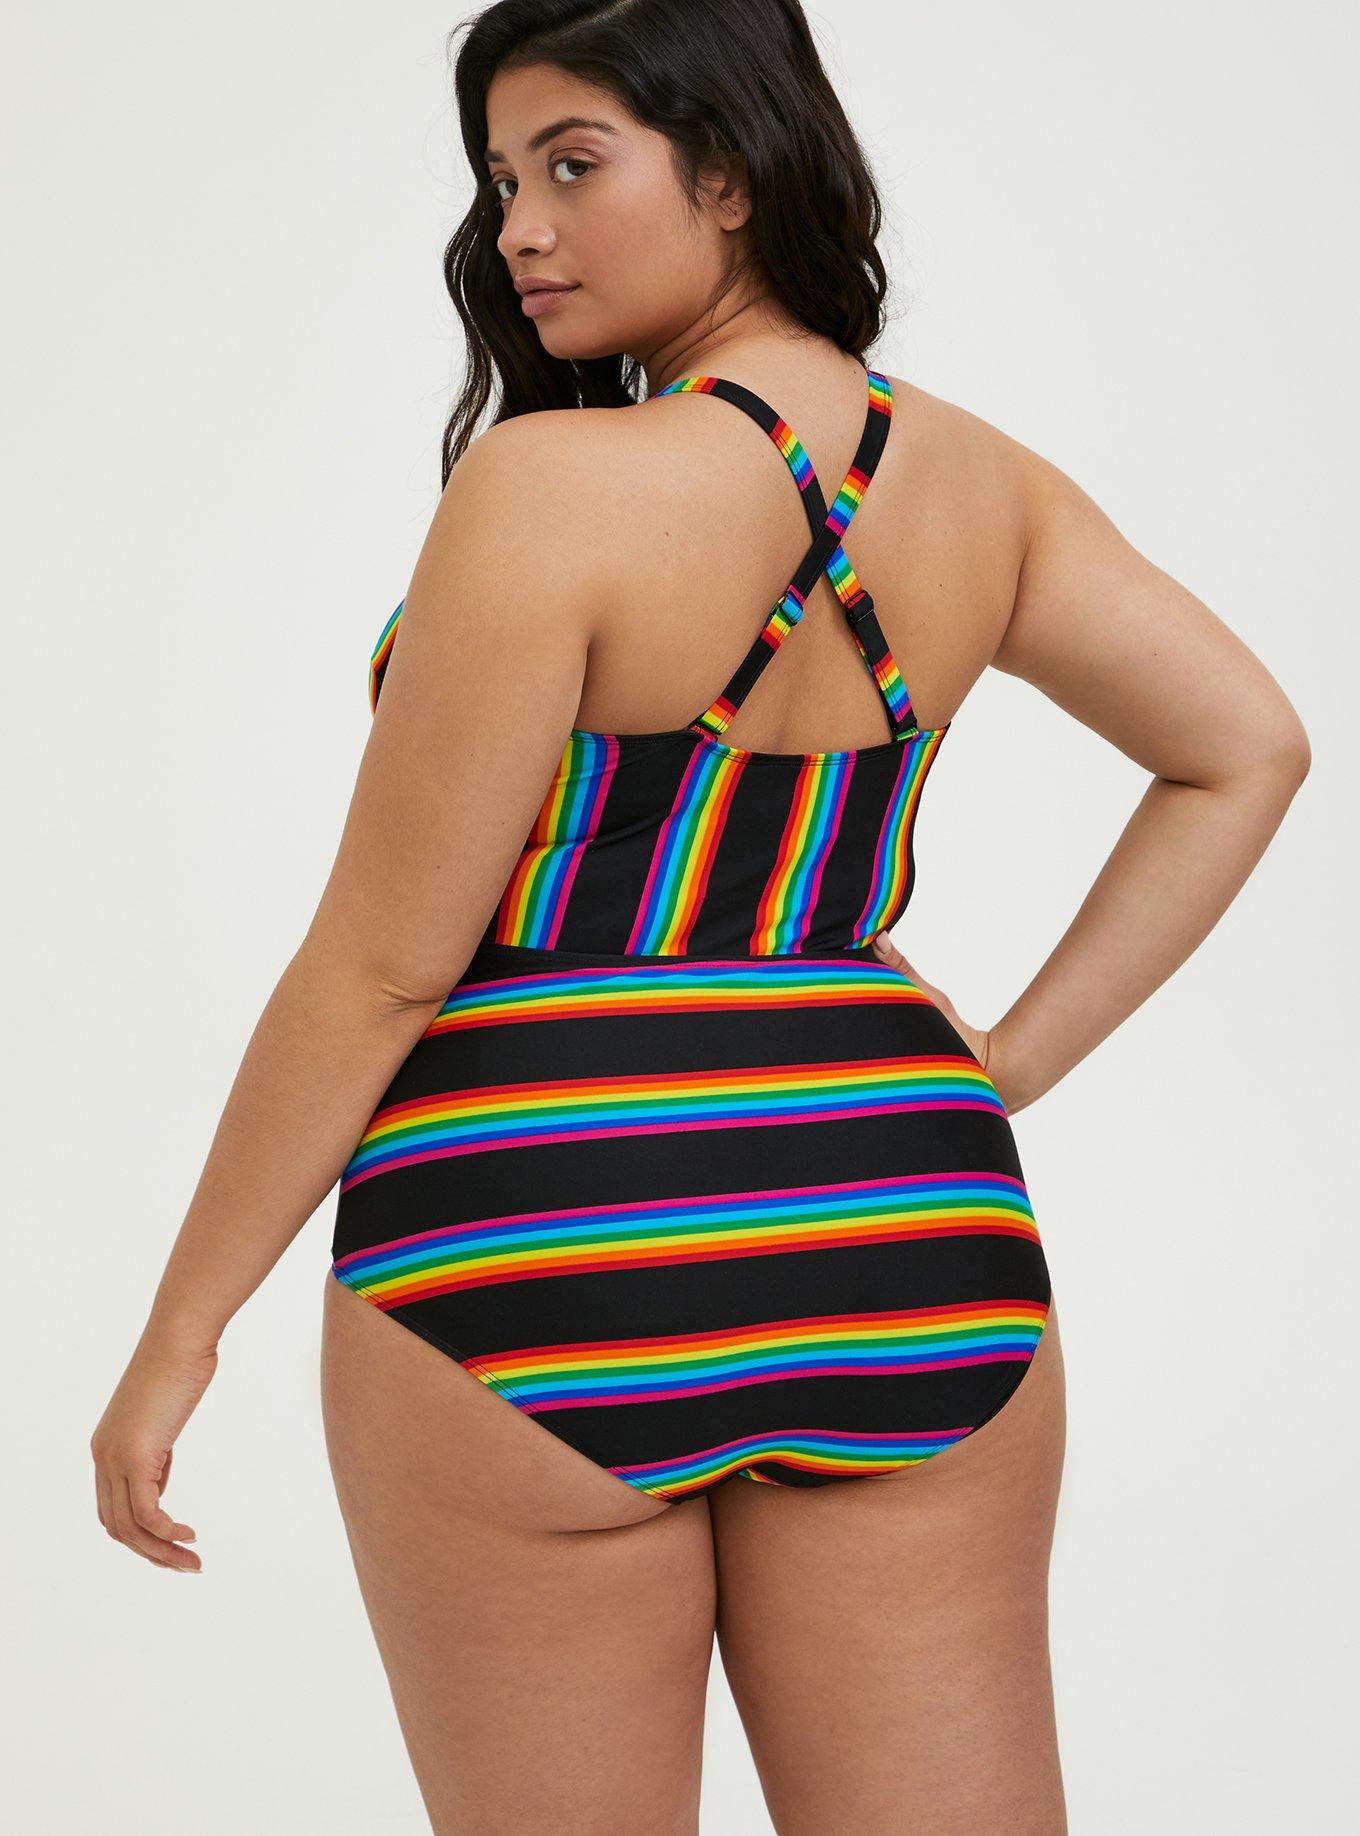 Rainbow Bathing Suit Rainbow Swimsuit One Piece Swimsuit High Cut Swimsuit,  Plus Size Swimwear, Modest Swimwear Hand Made in USA -  Canada